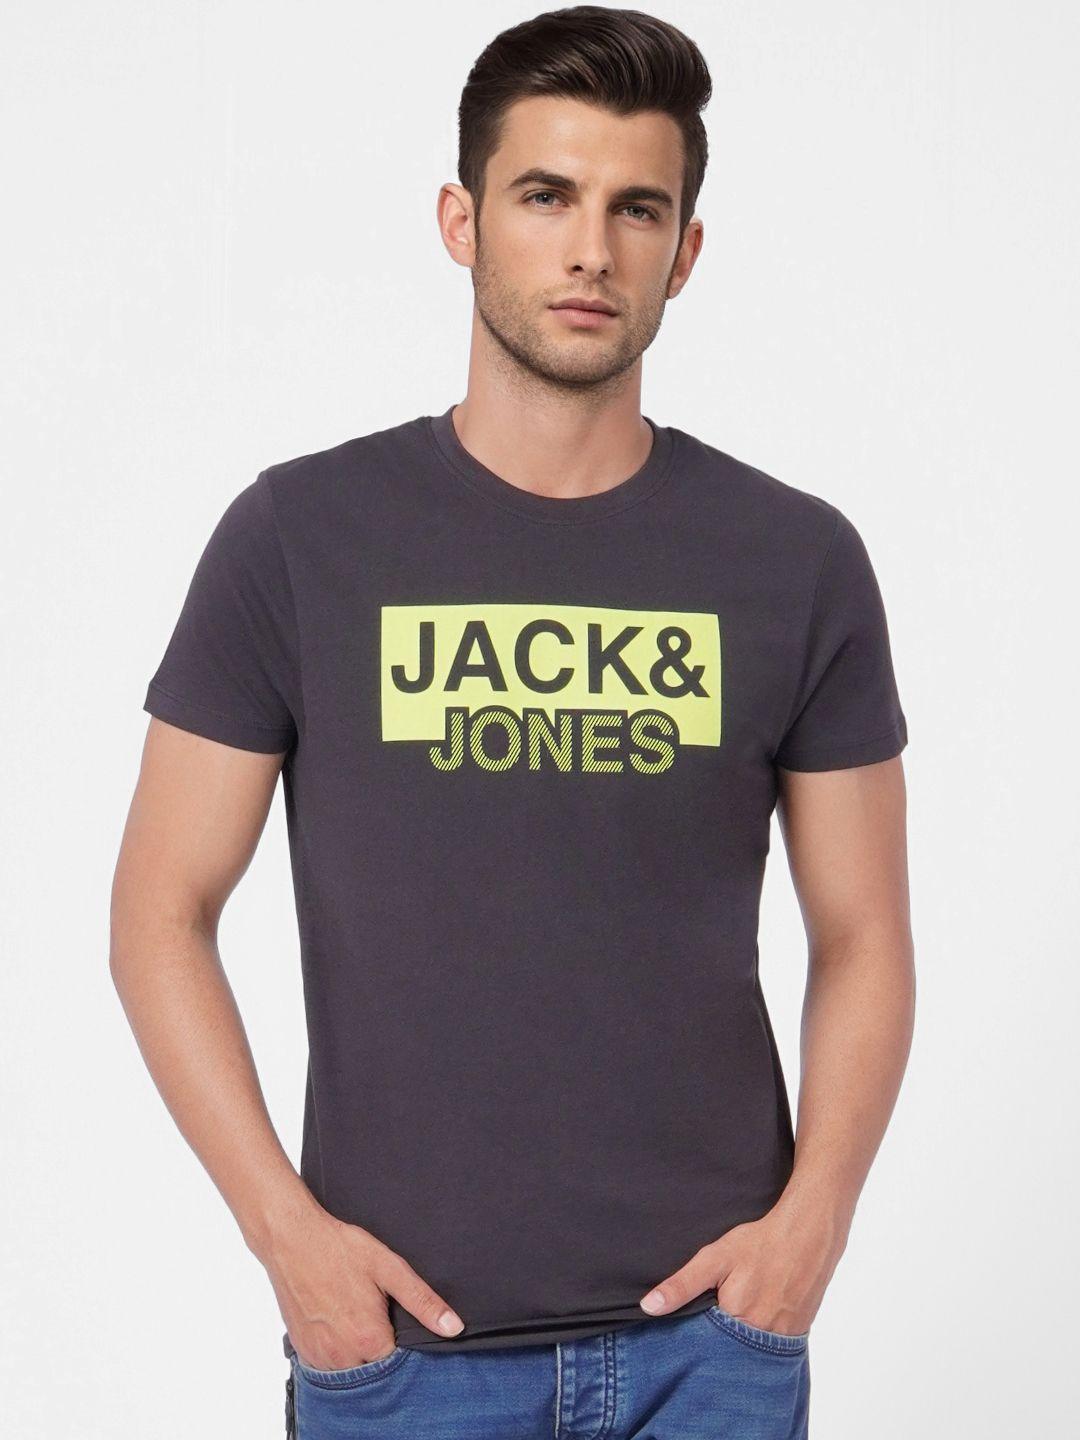 jack & jones men black & lime green typography printed slim fit pure cotton casual t-shirt